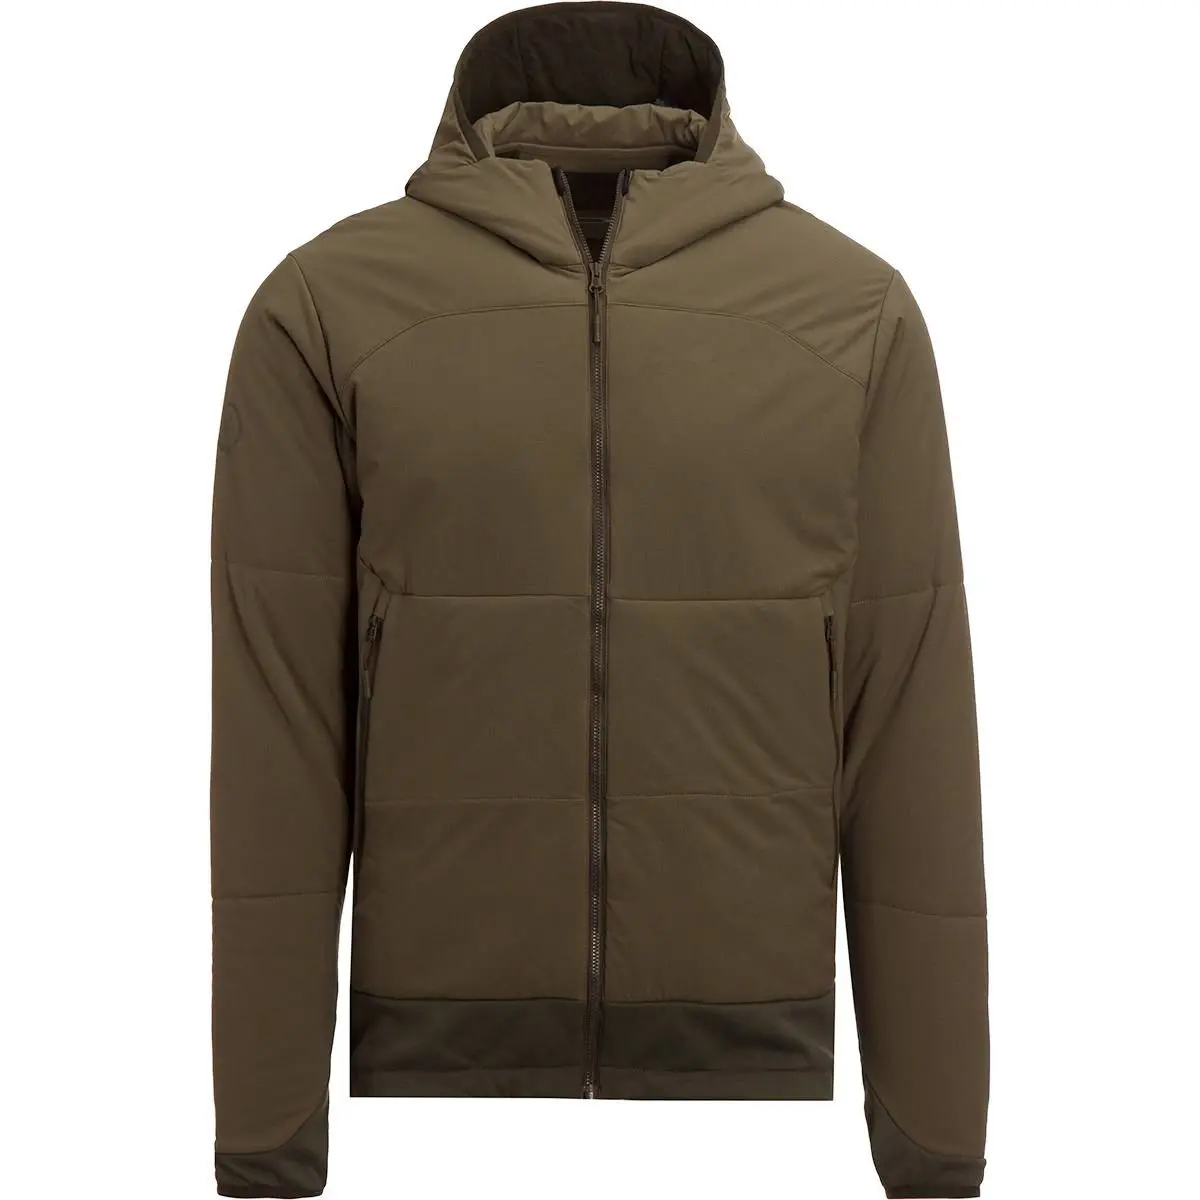 Men Khaki Padded Hybrid Jacket Warmth Thermal Lightweight Padded Jacket Adjust Hood Winter Jacket